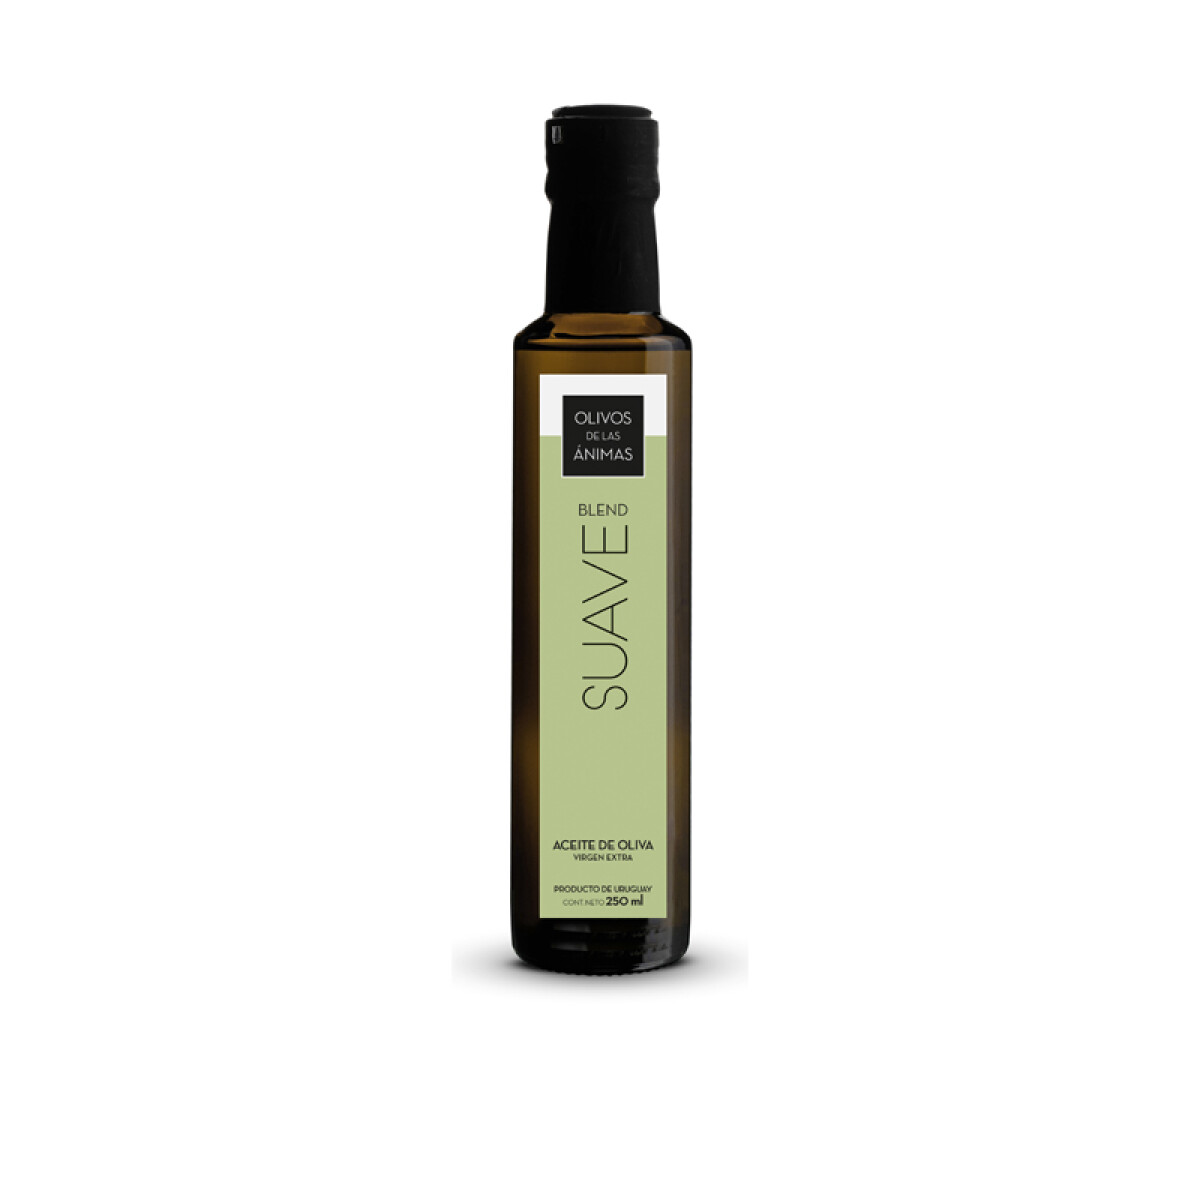 Aceite de oliva Suave 250ml Olivos de las Animas 